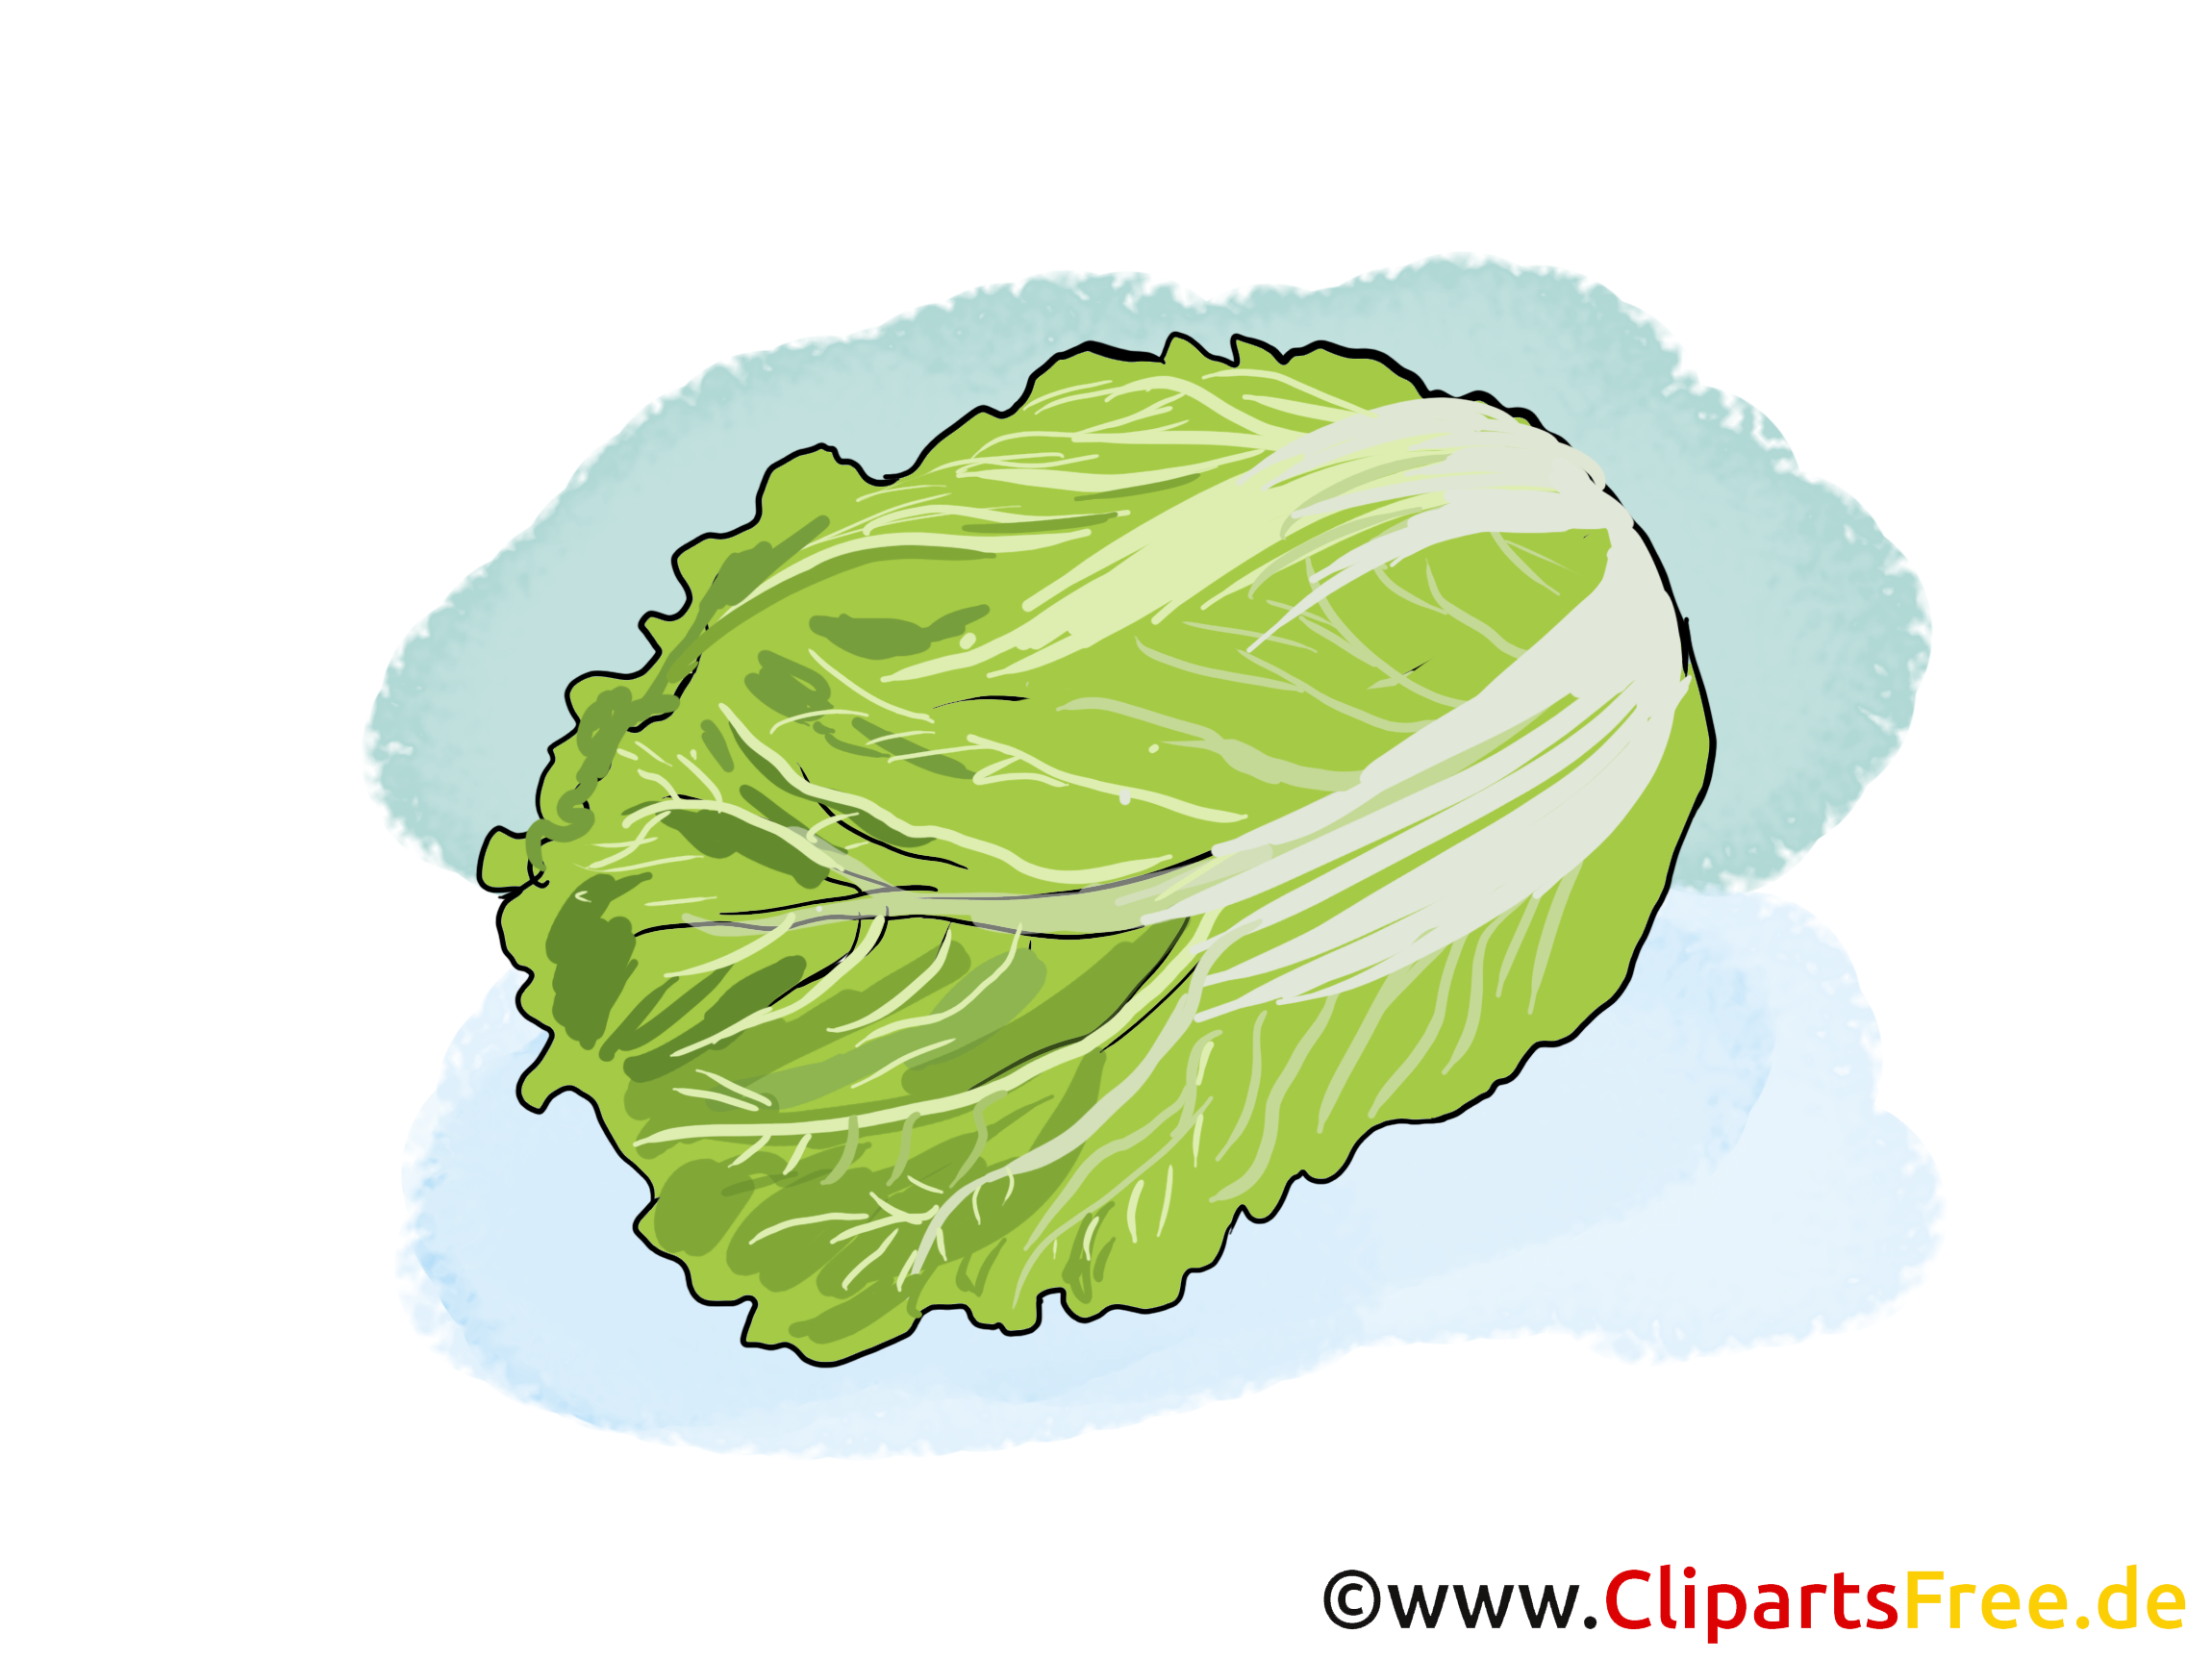 Salade clip art gratuit - Légume dessin